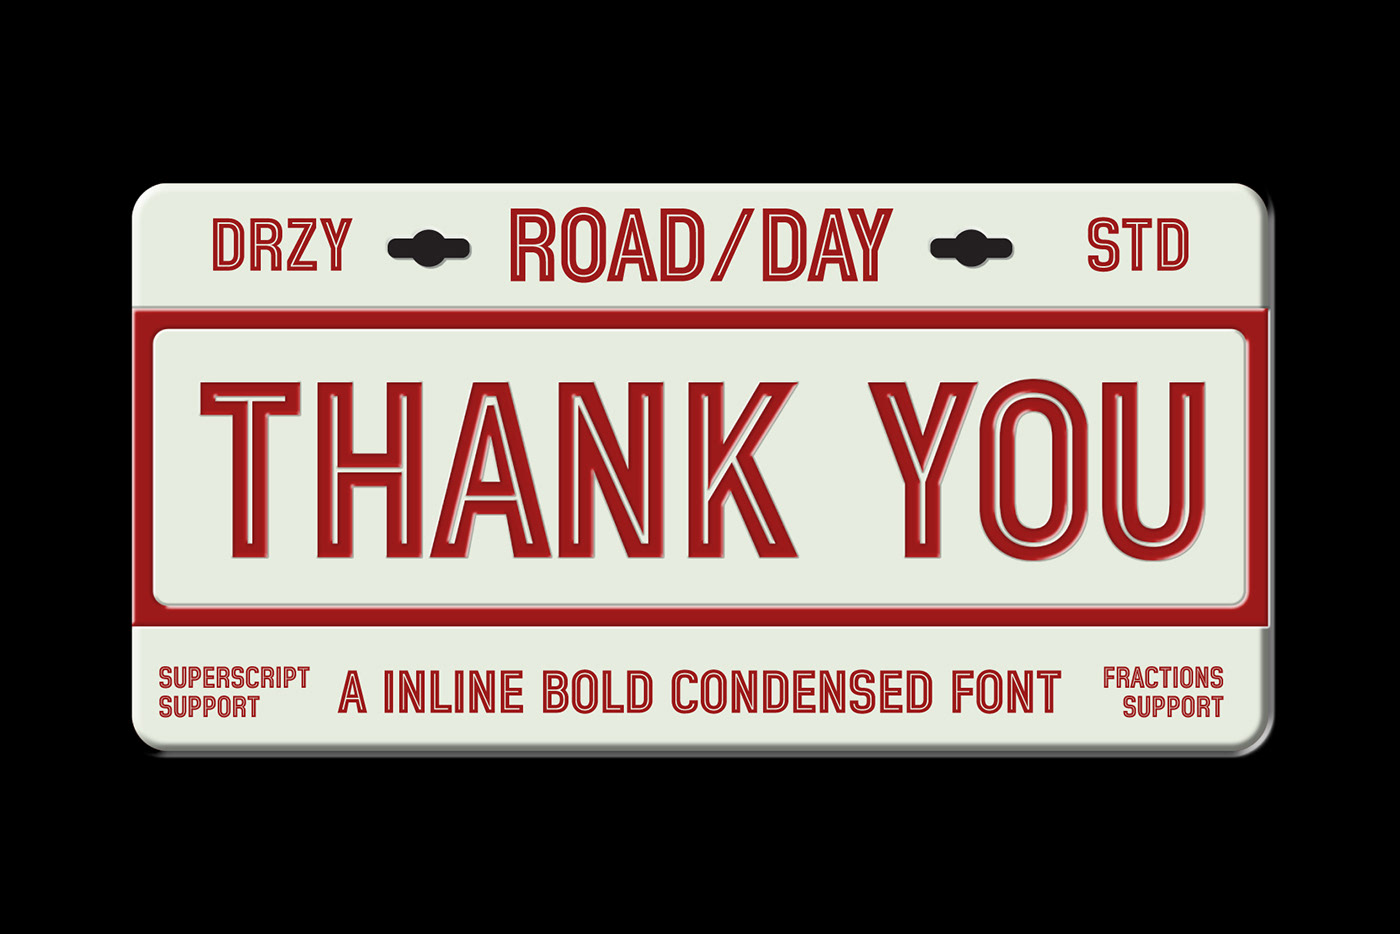 Roadbay – Inline Bold Condensed Font